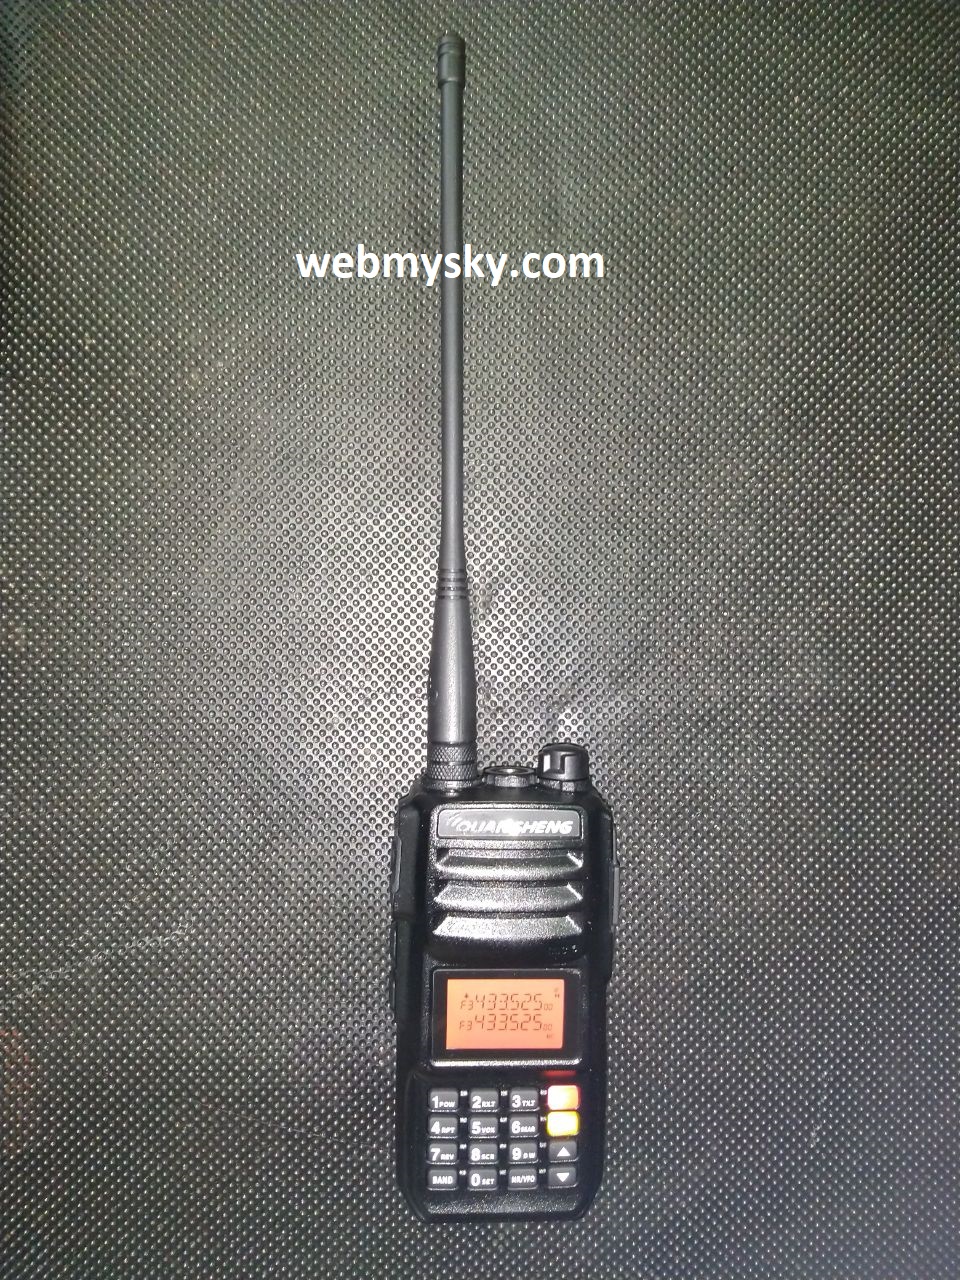 QuanSheng TG-UV2 Plus: รีวิววิทยุสื่อสารสองทางที่มีกำลังสูงและทรงพลัง